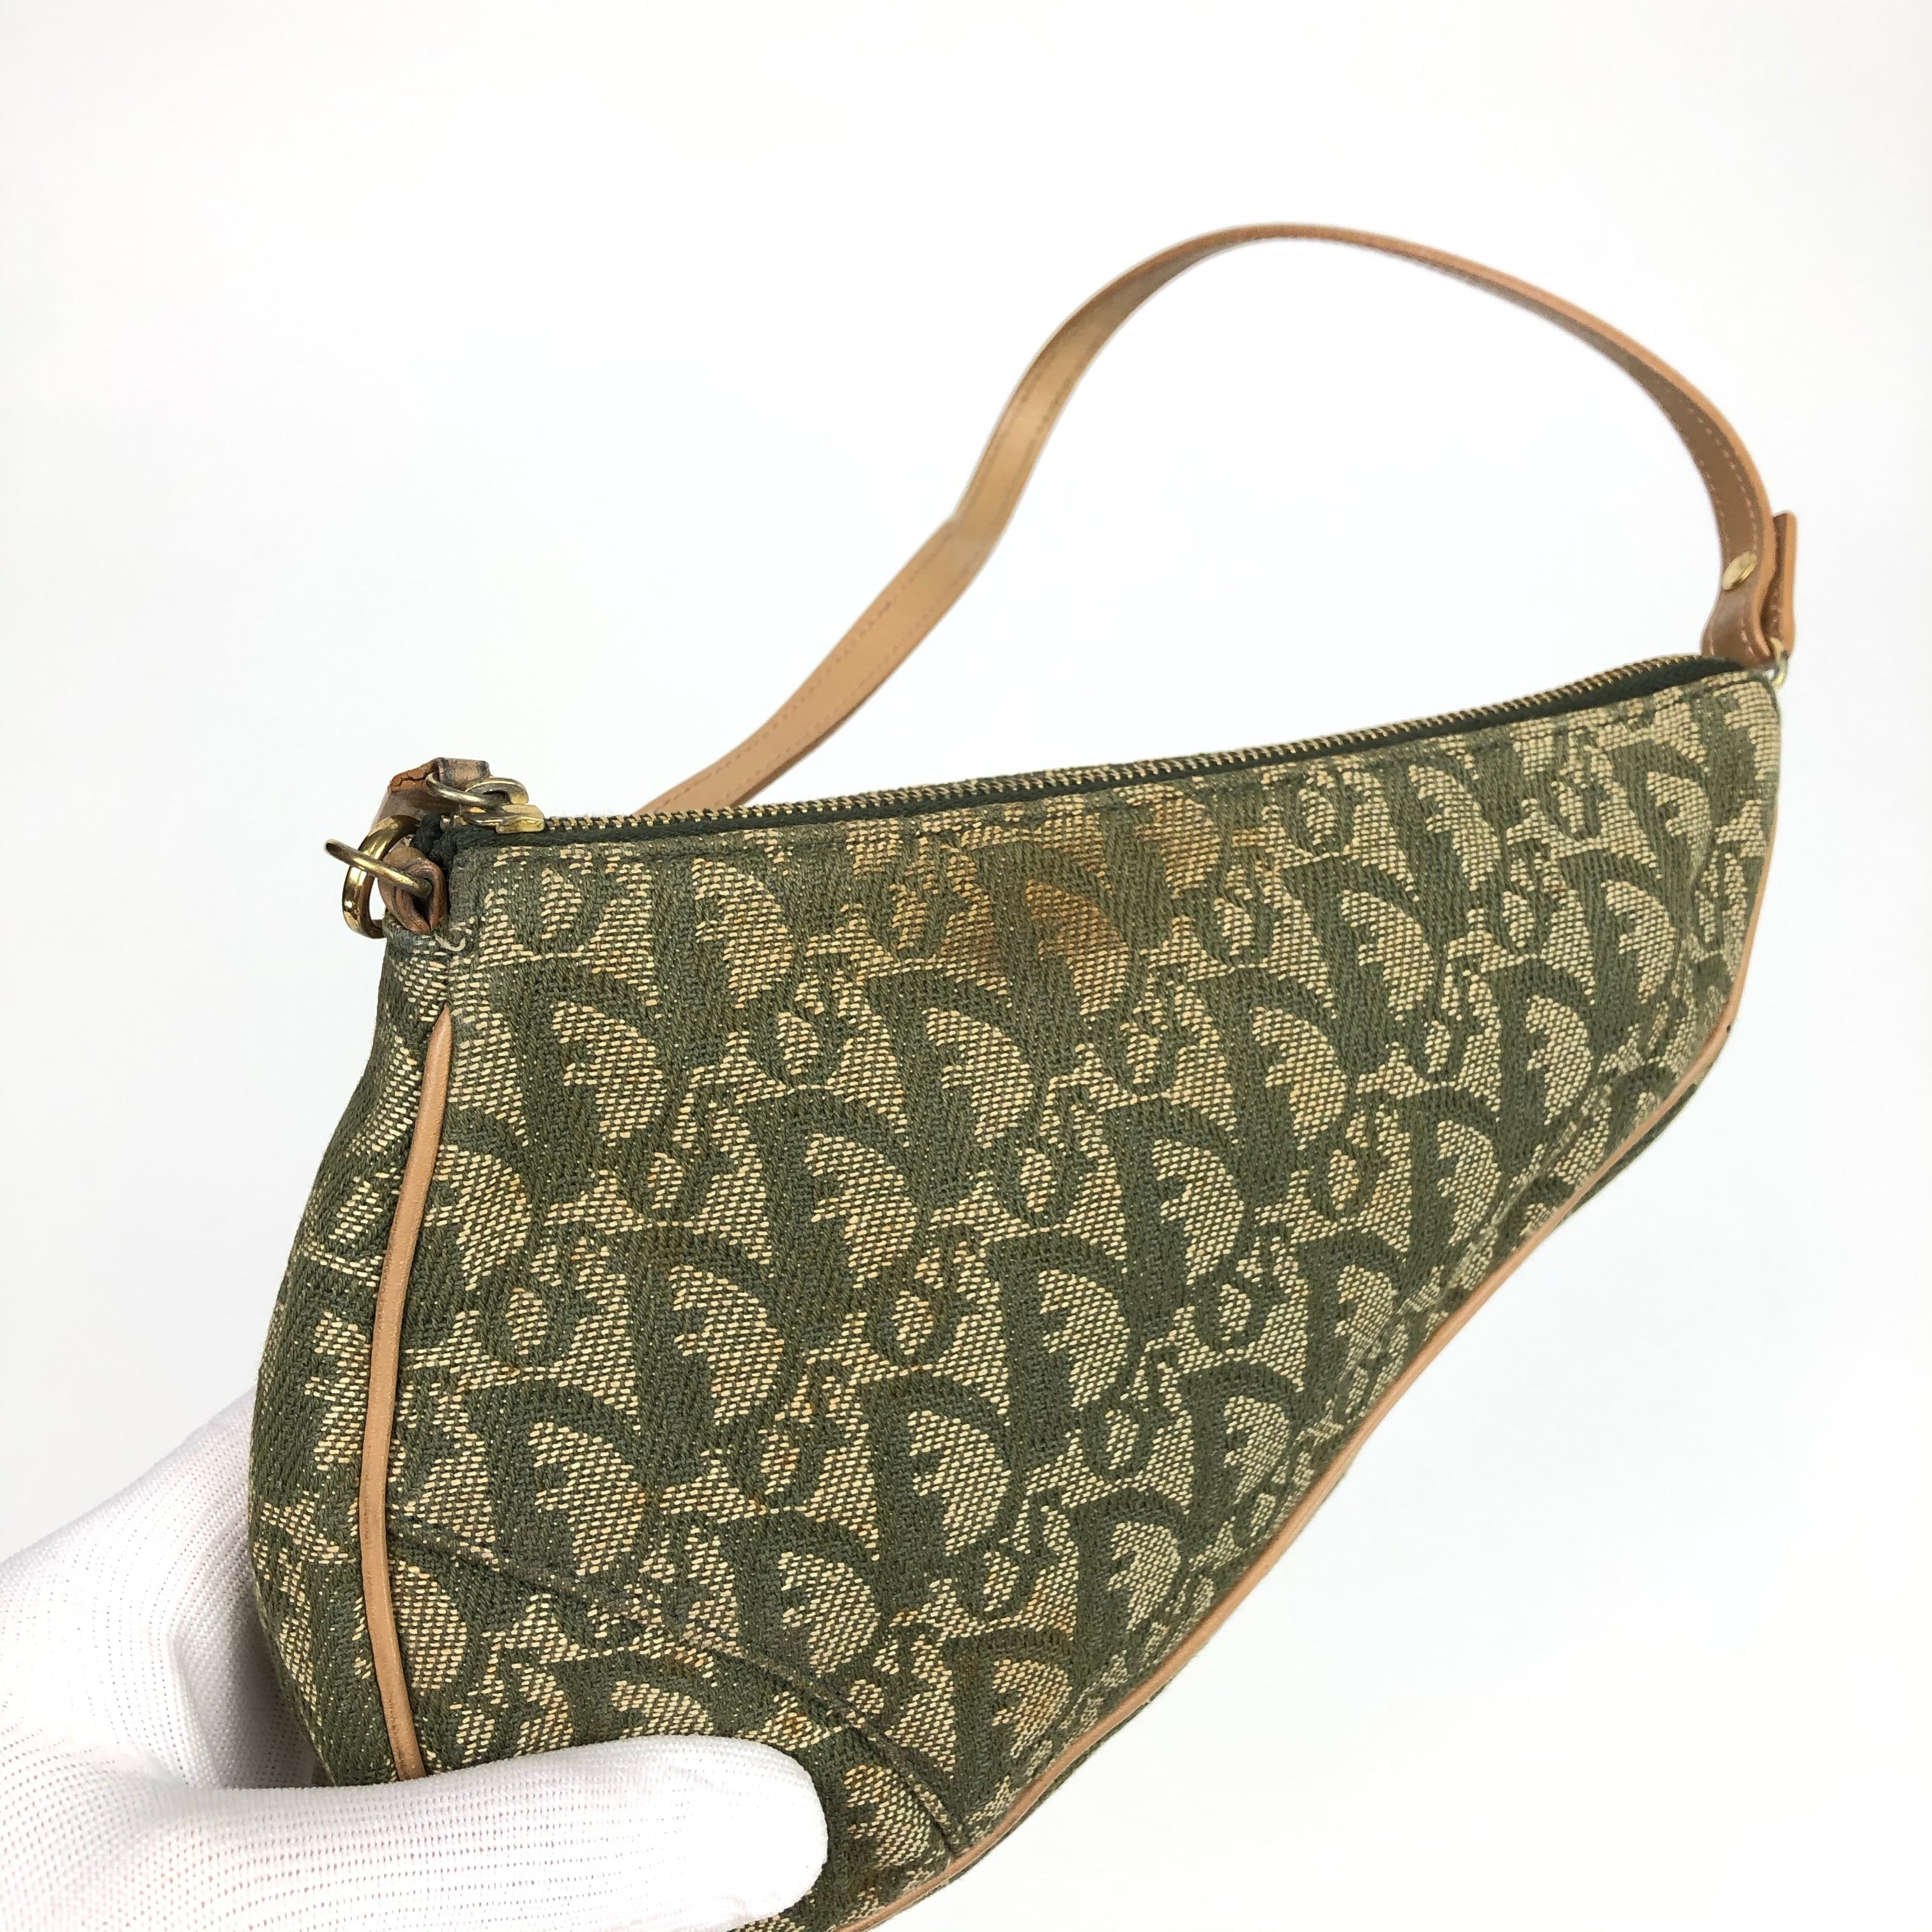 Christina Dior Saddle Bag